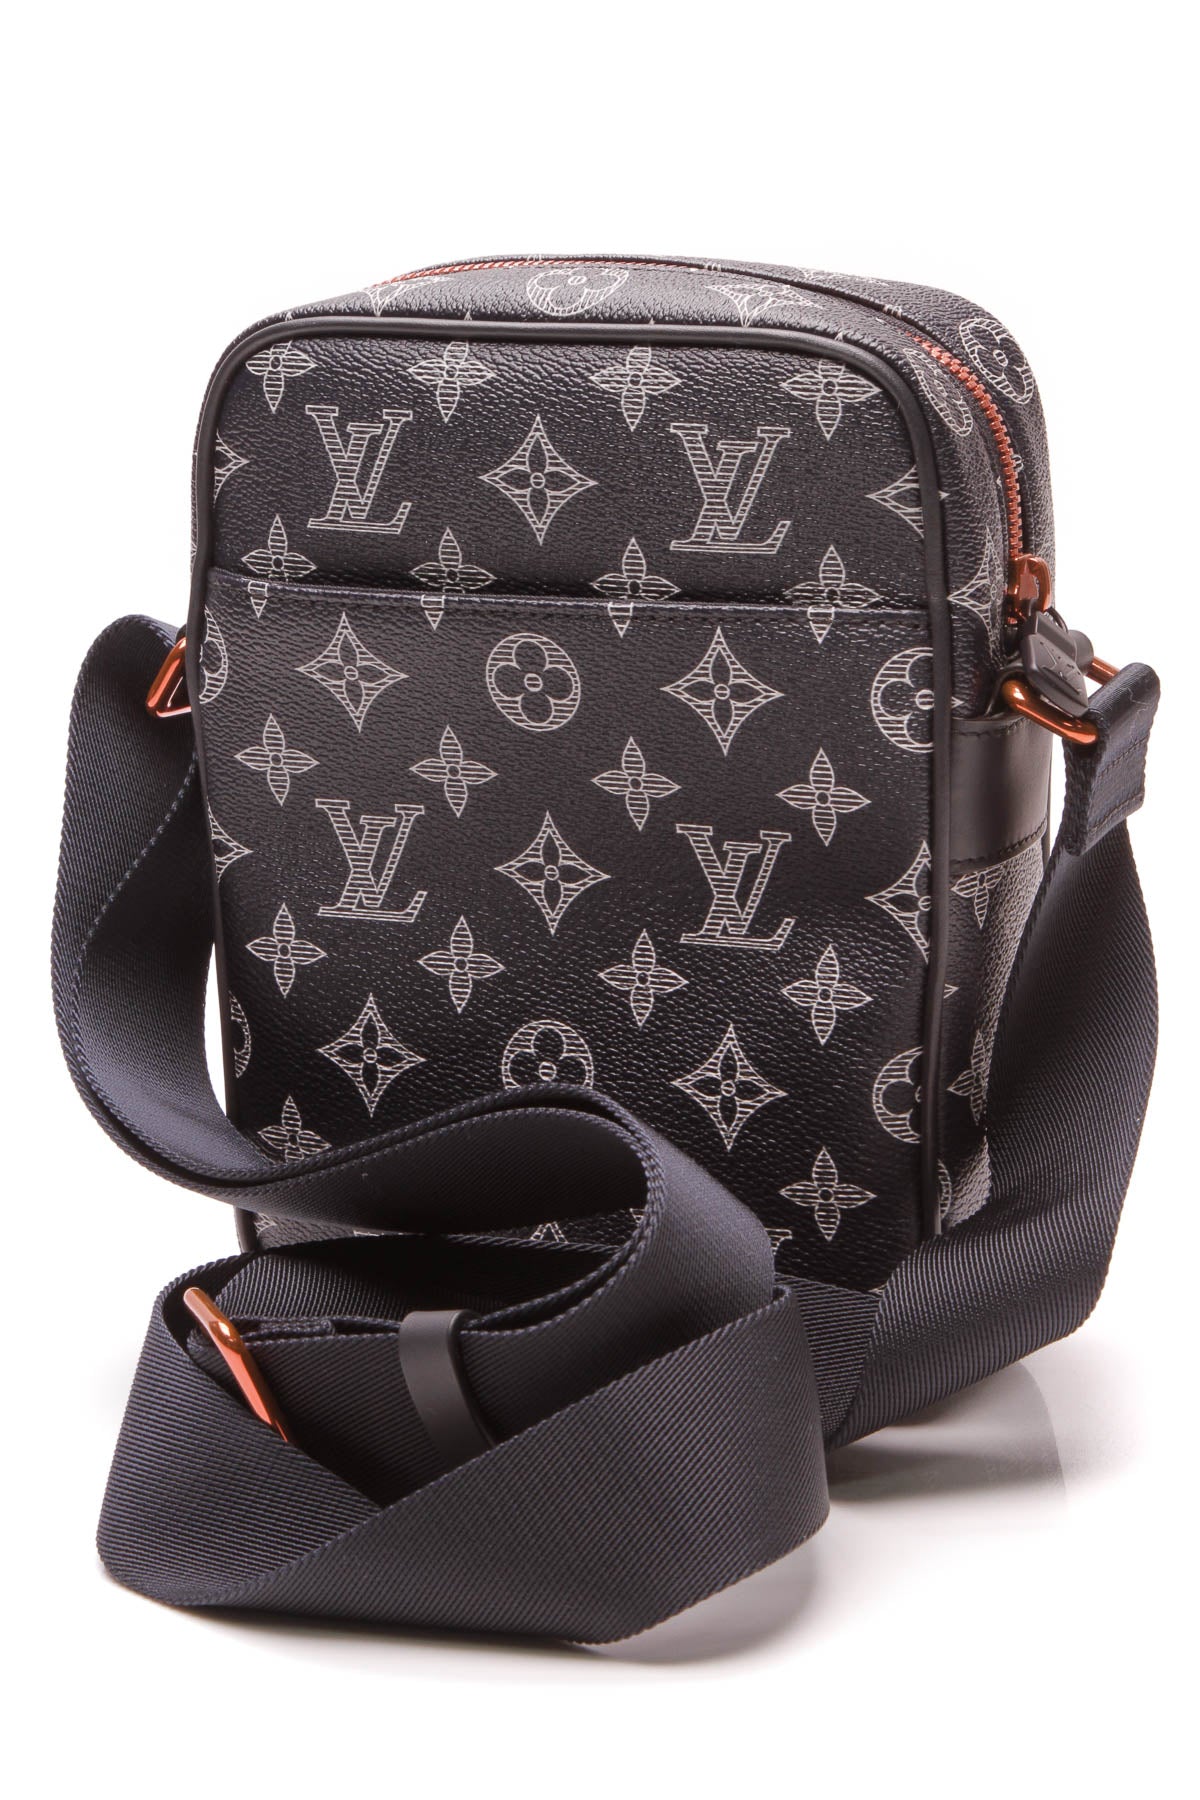 LV side trunk bag brand new full set, Luxury, Bags & Wallets on Carousell